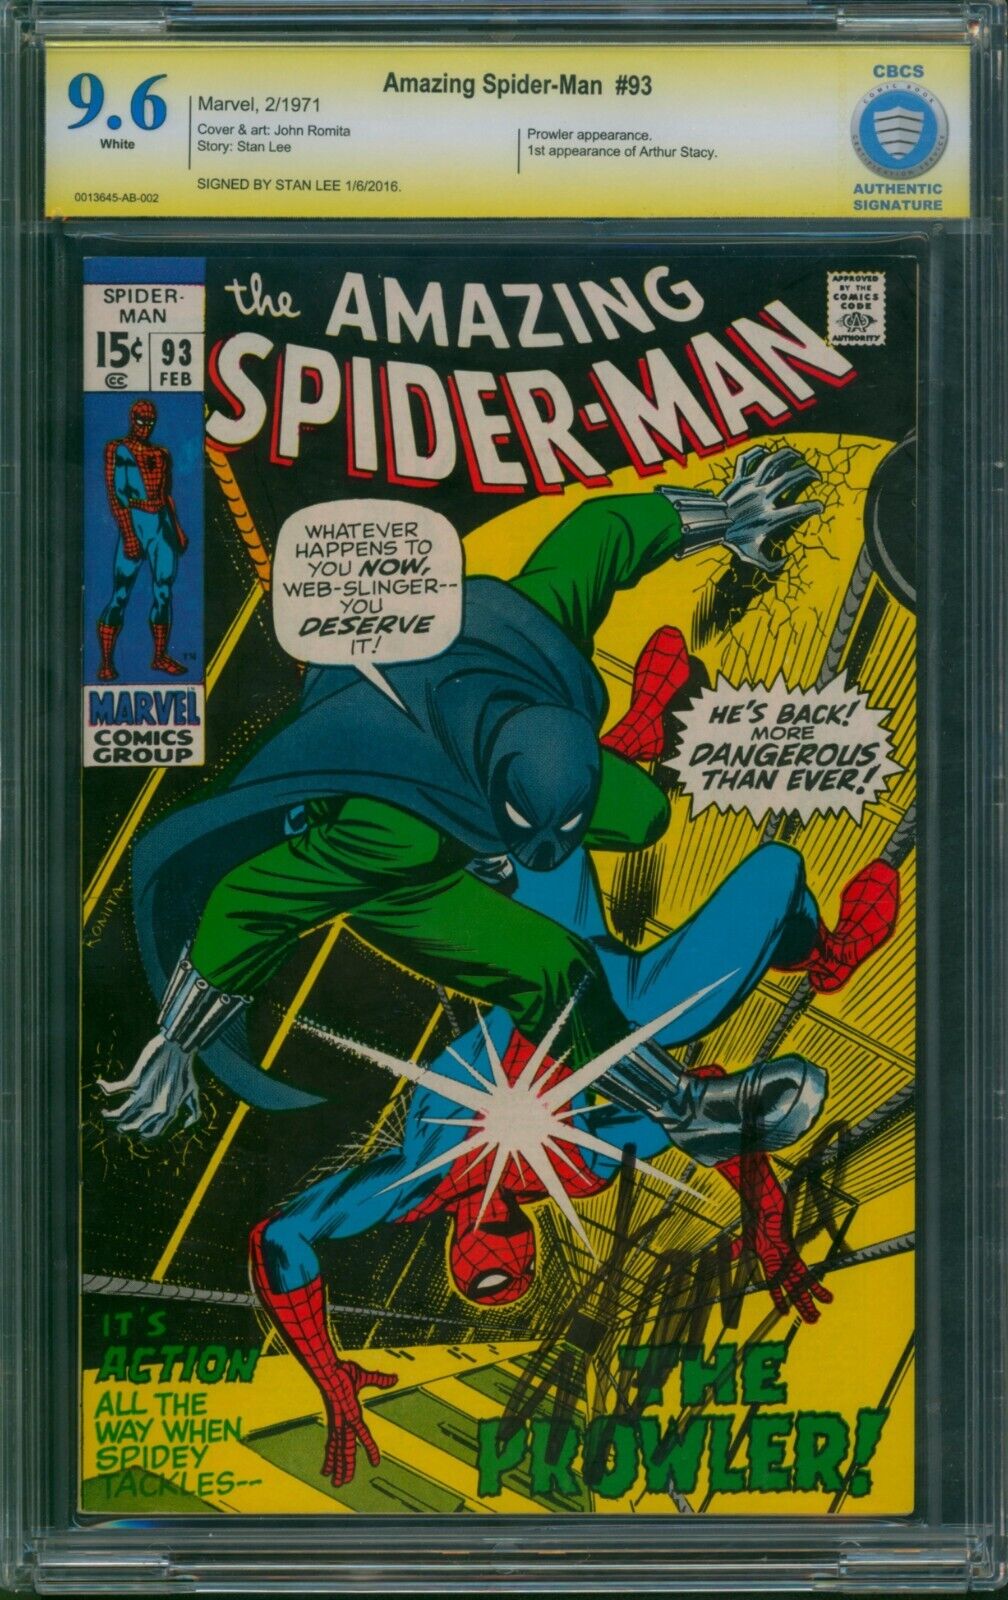 AMAZING SPIDER-MAN #93 ⭐ CBCS 9.6 SIGNED STAN LEE ⭐ 1st Arthur Stacy Marvel 1971